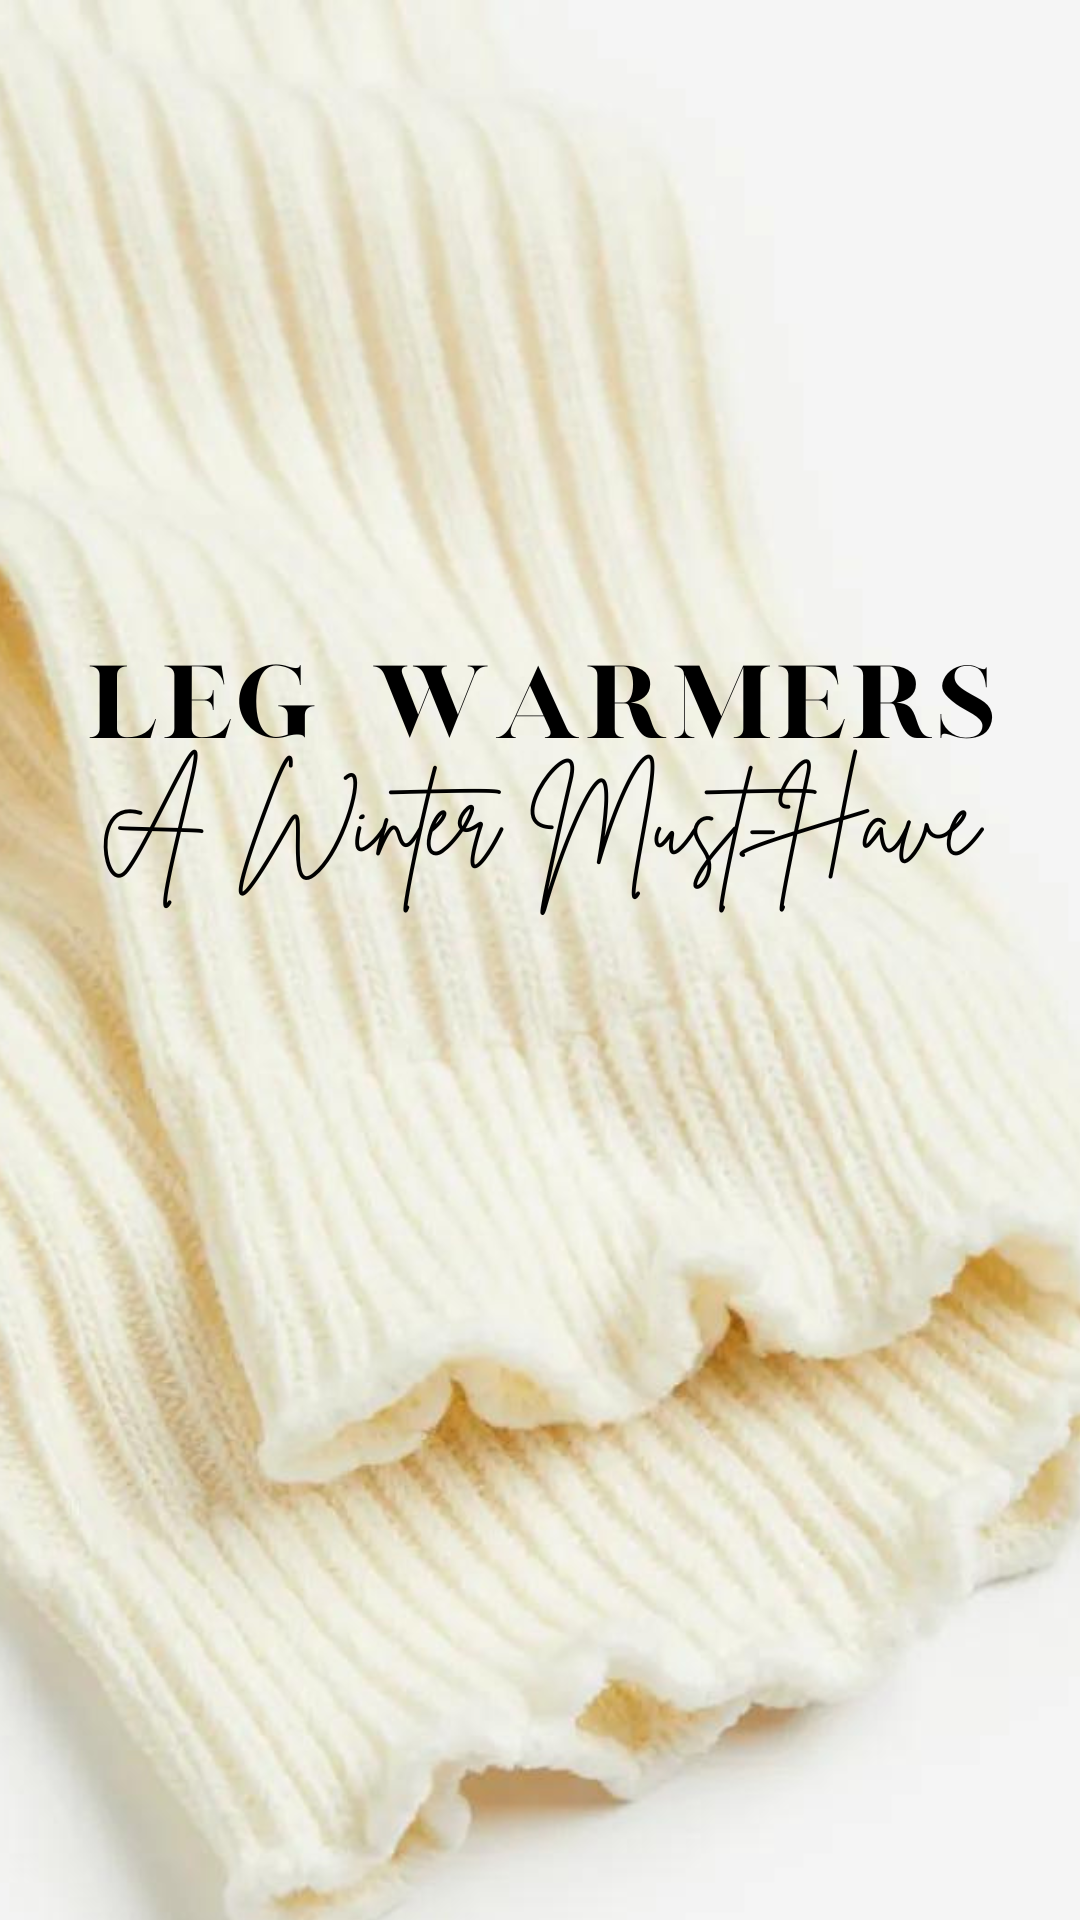 Leg Warmers - A winter staple